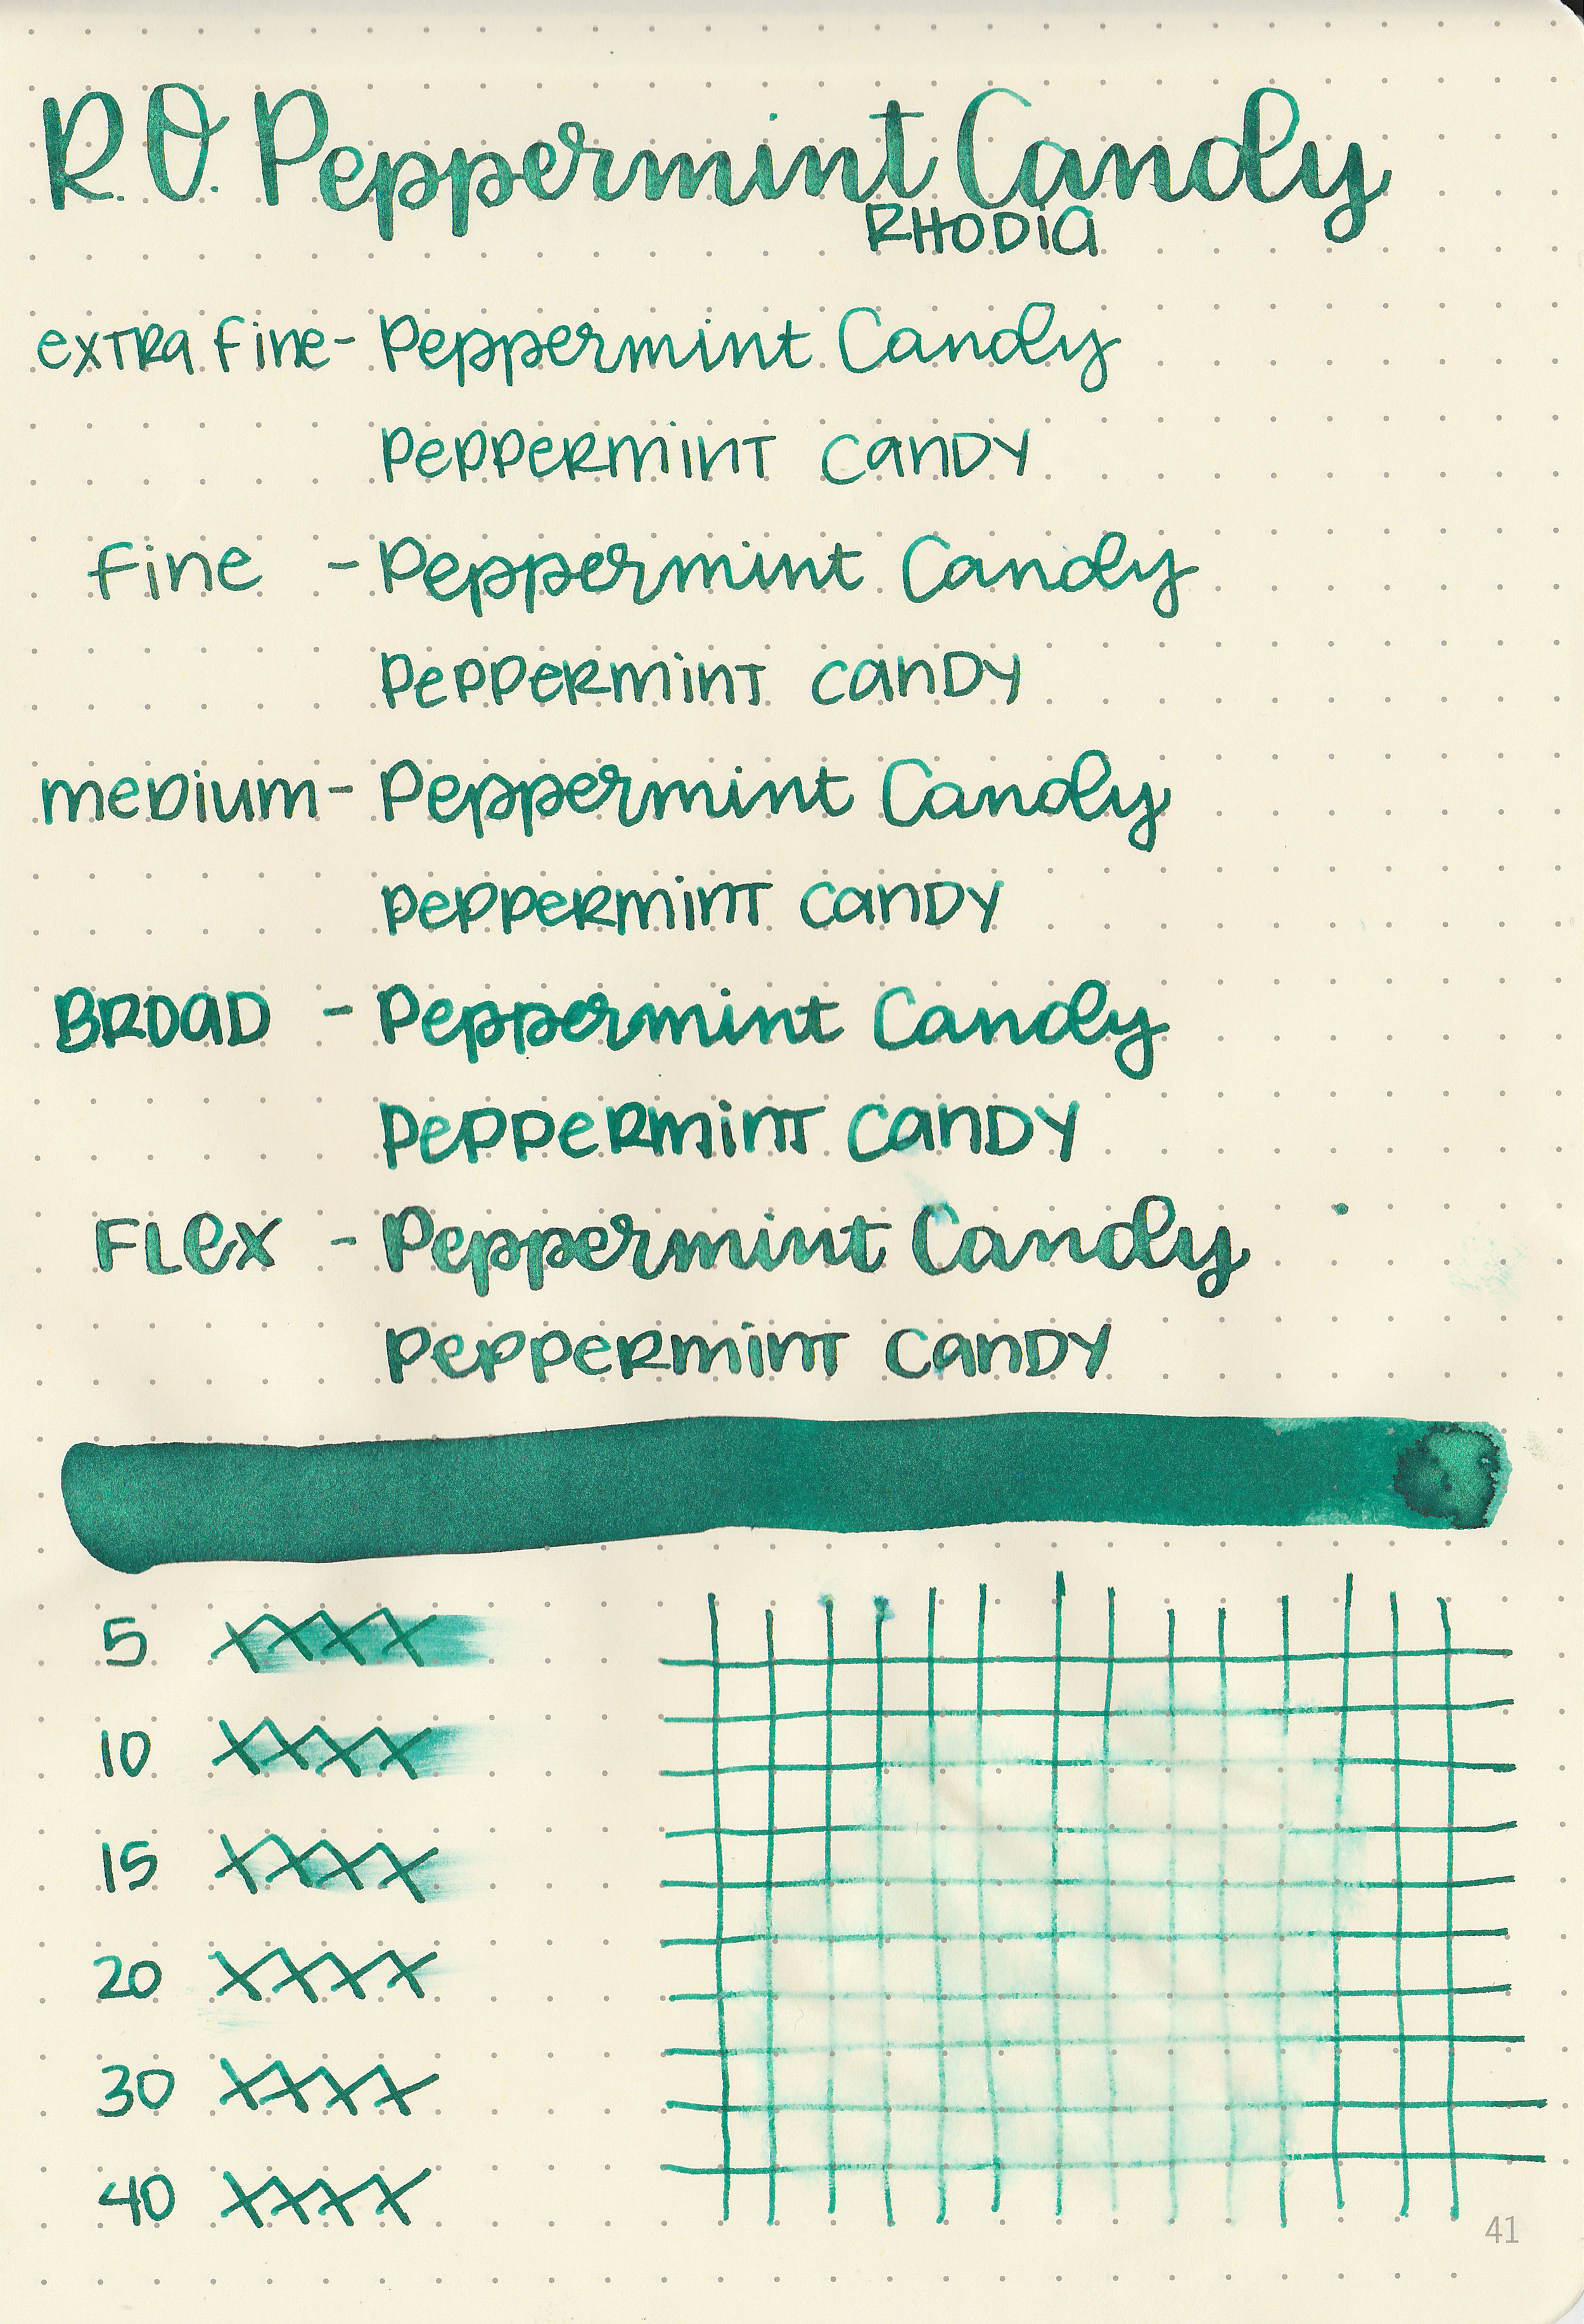 ro-peppermint-candy-5.jpg